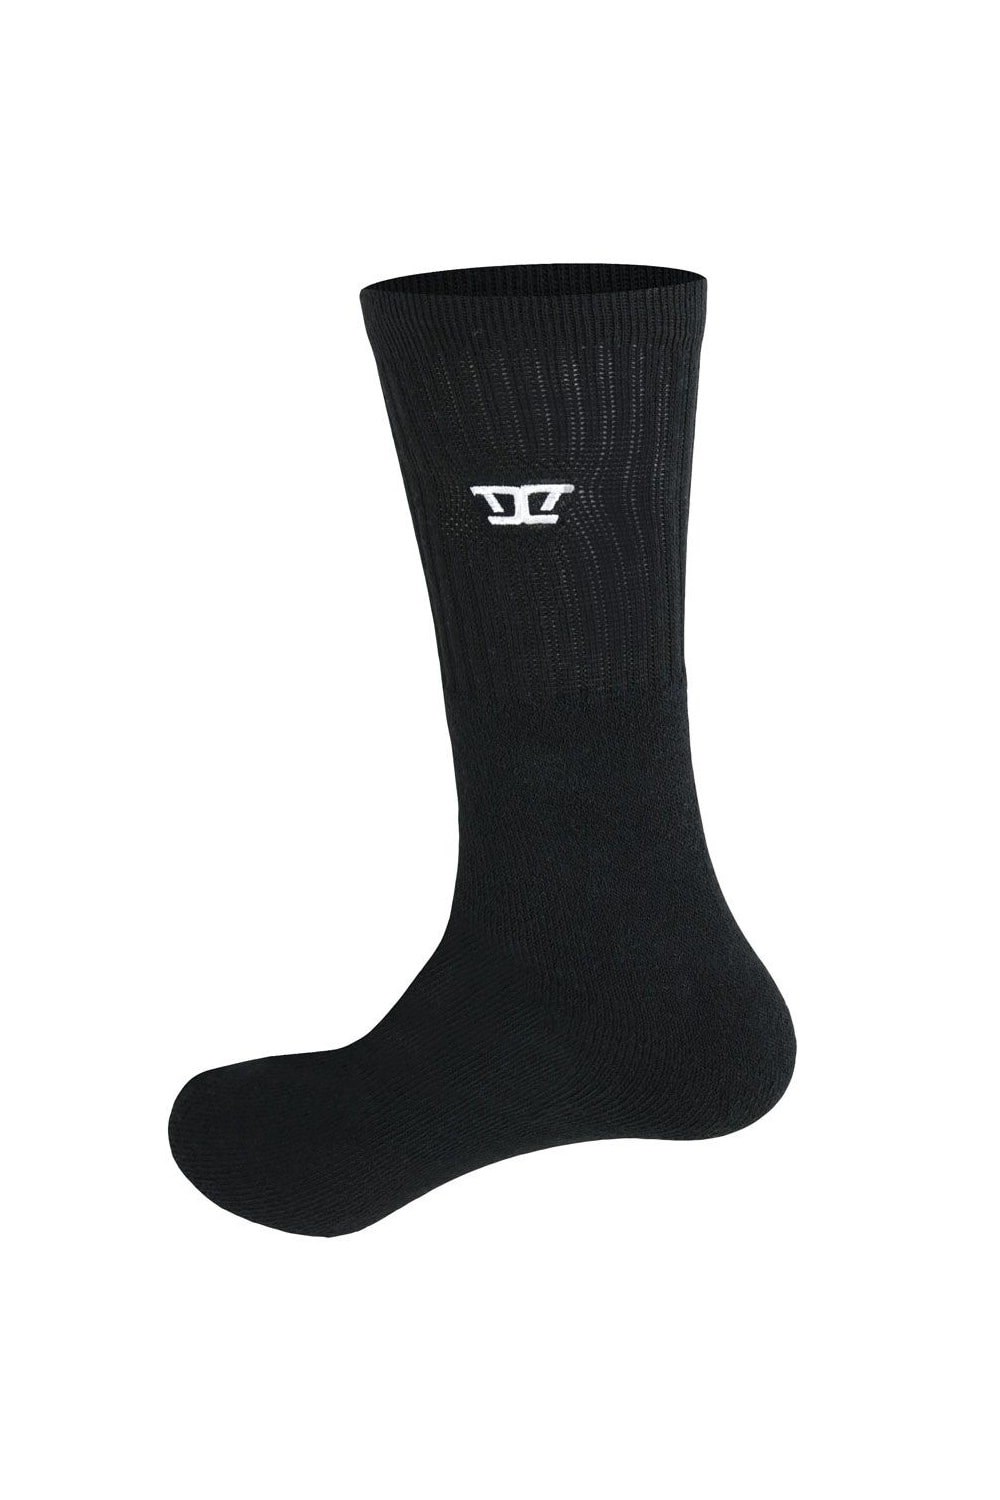 Logan D555 Mens Kingsize Socks 2-pack -